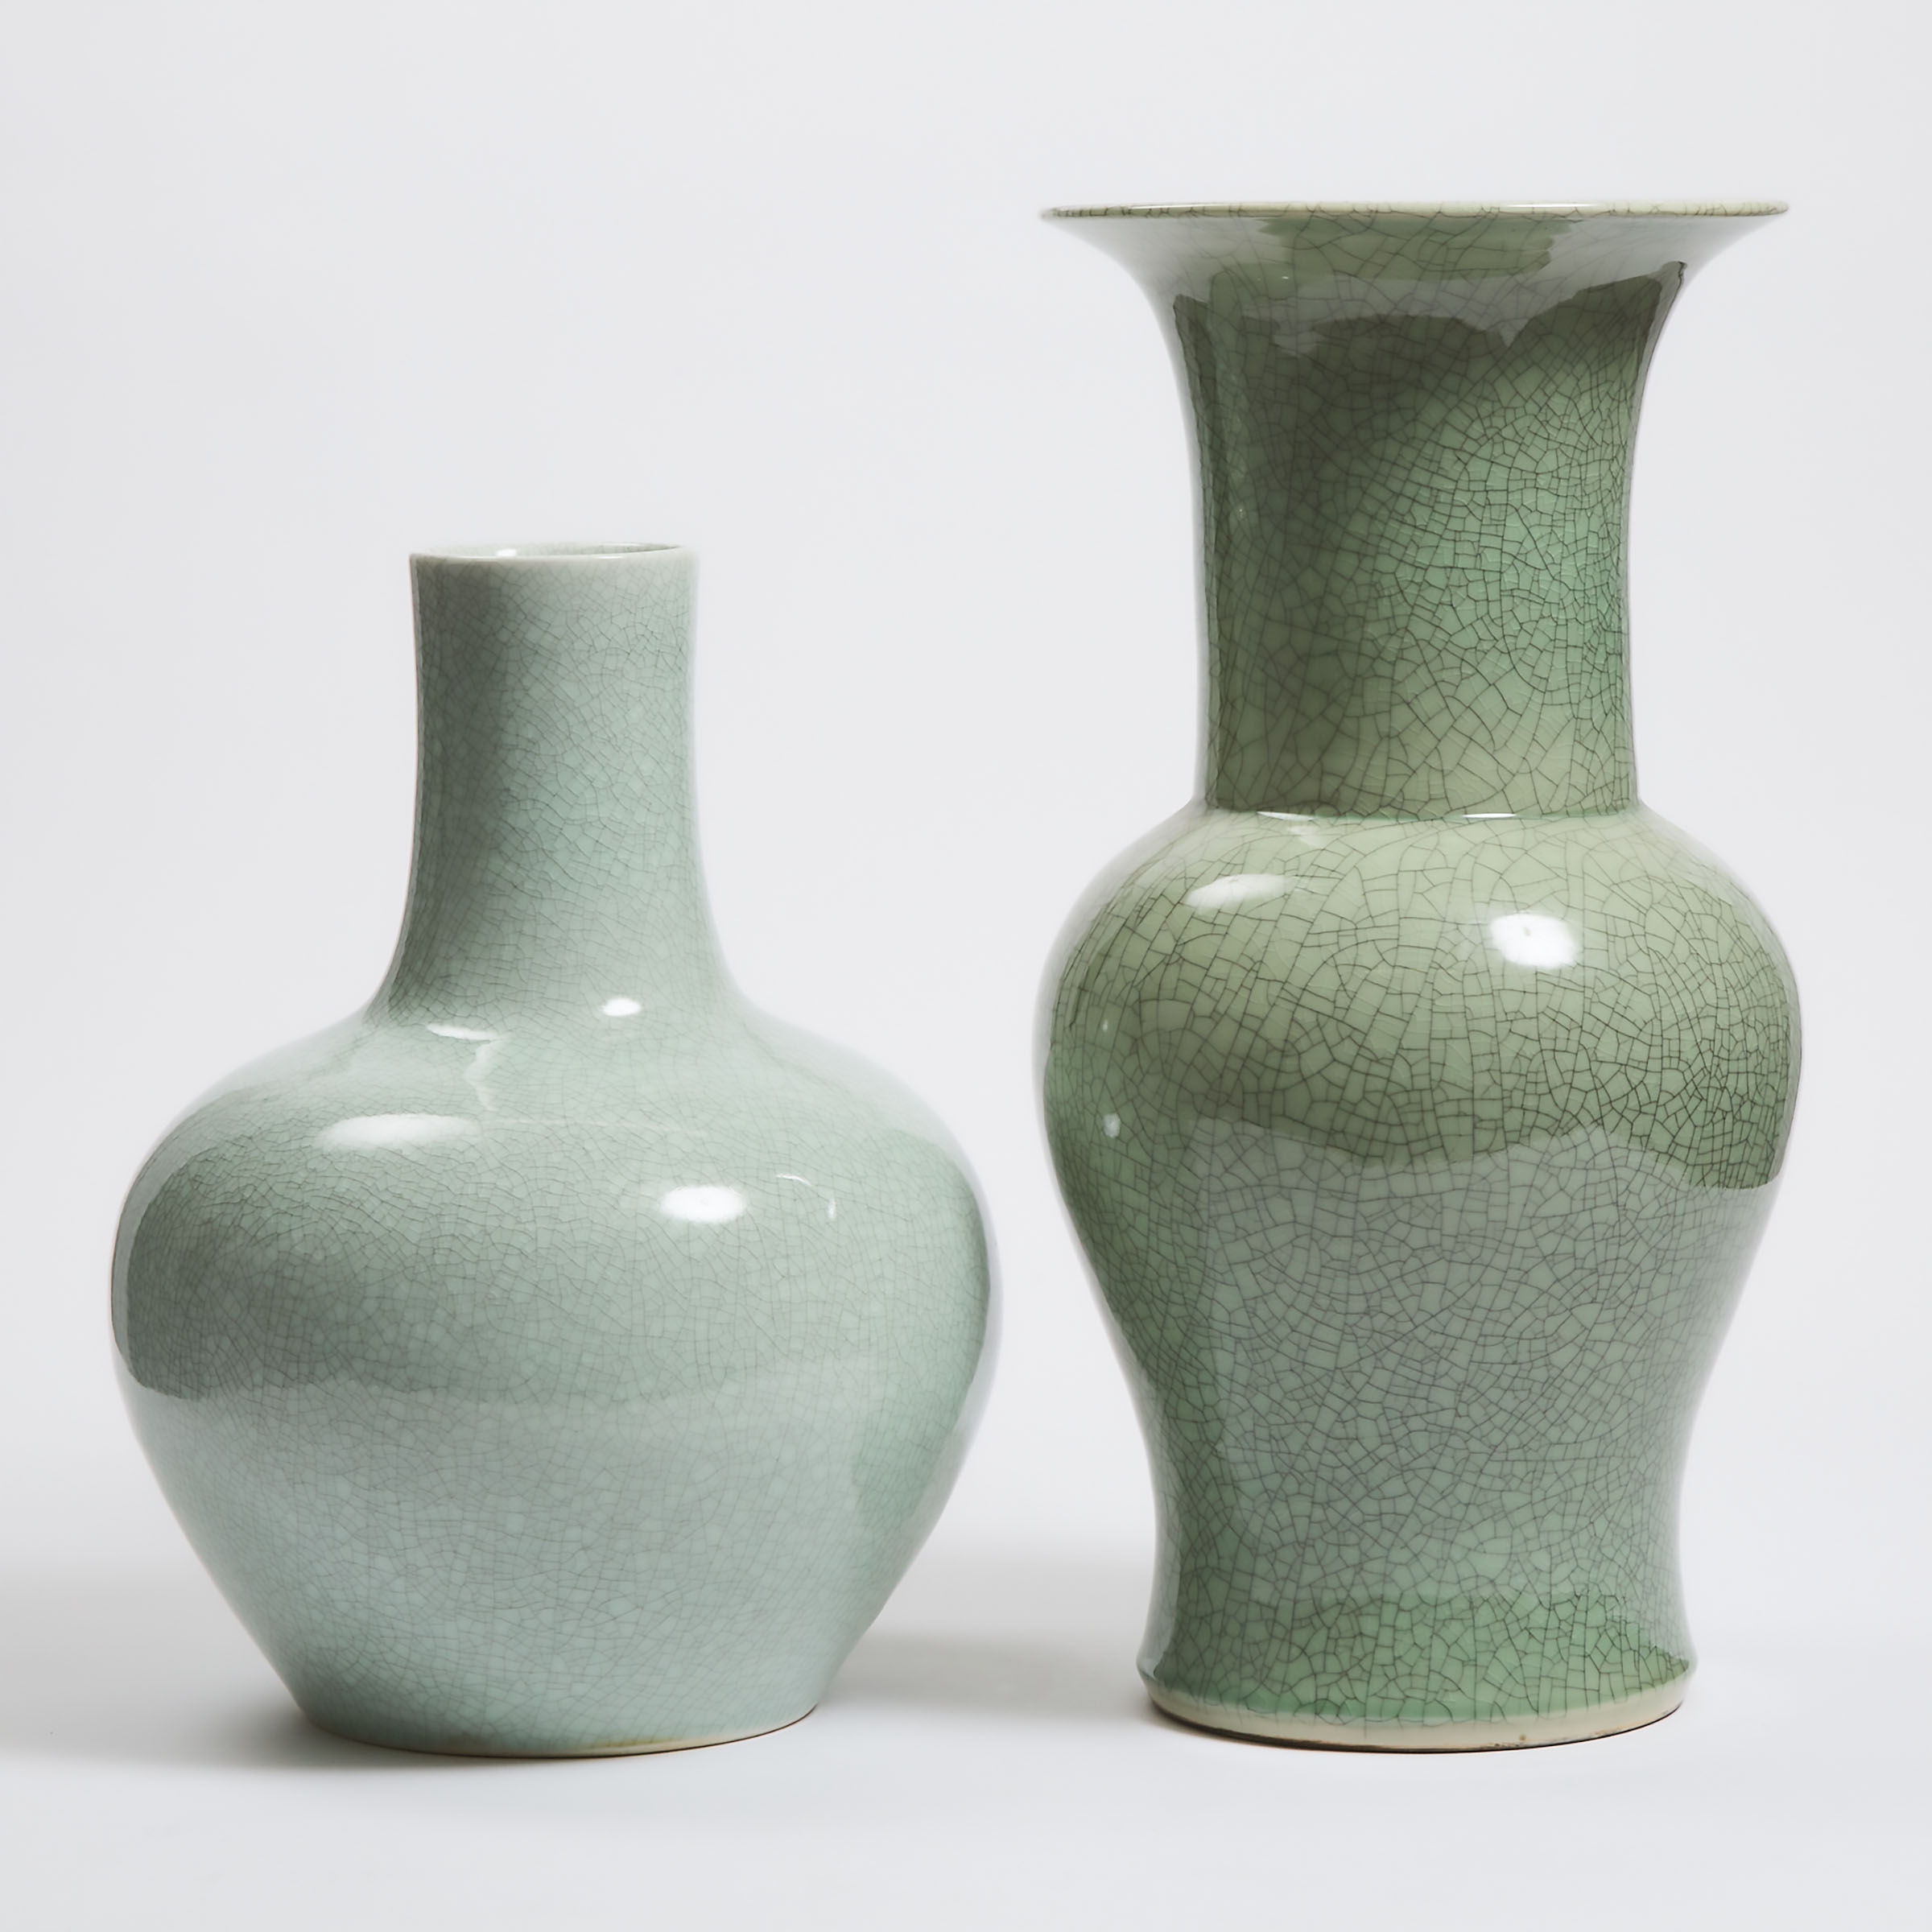 Two Large Chinese Crackled Glaze Vases, 20th Century